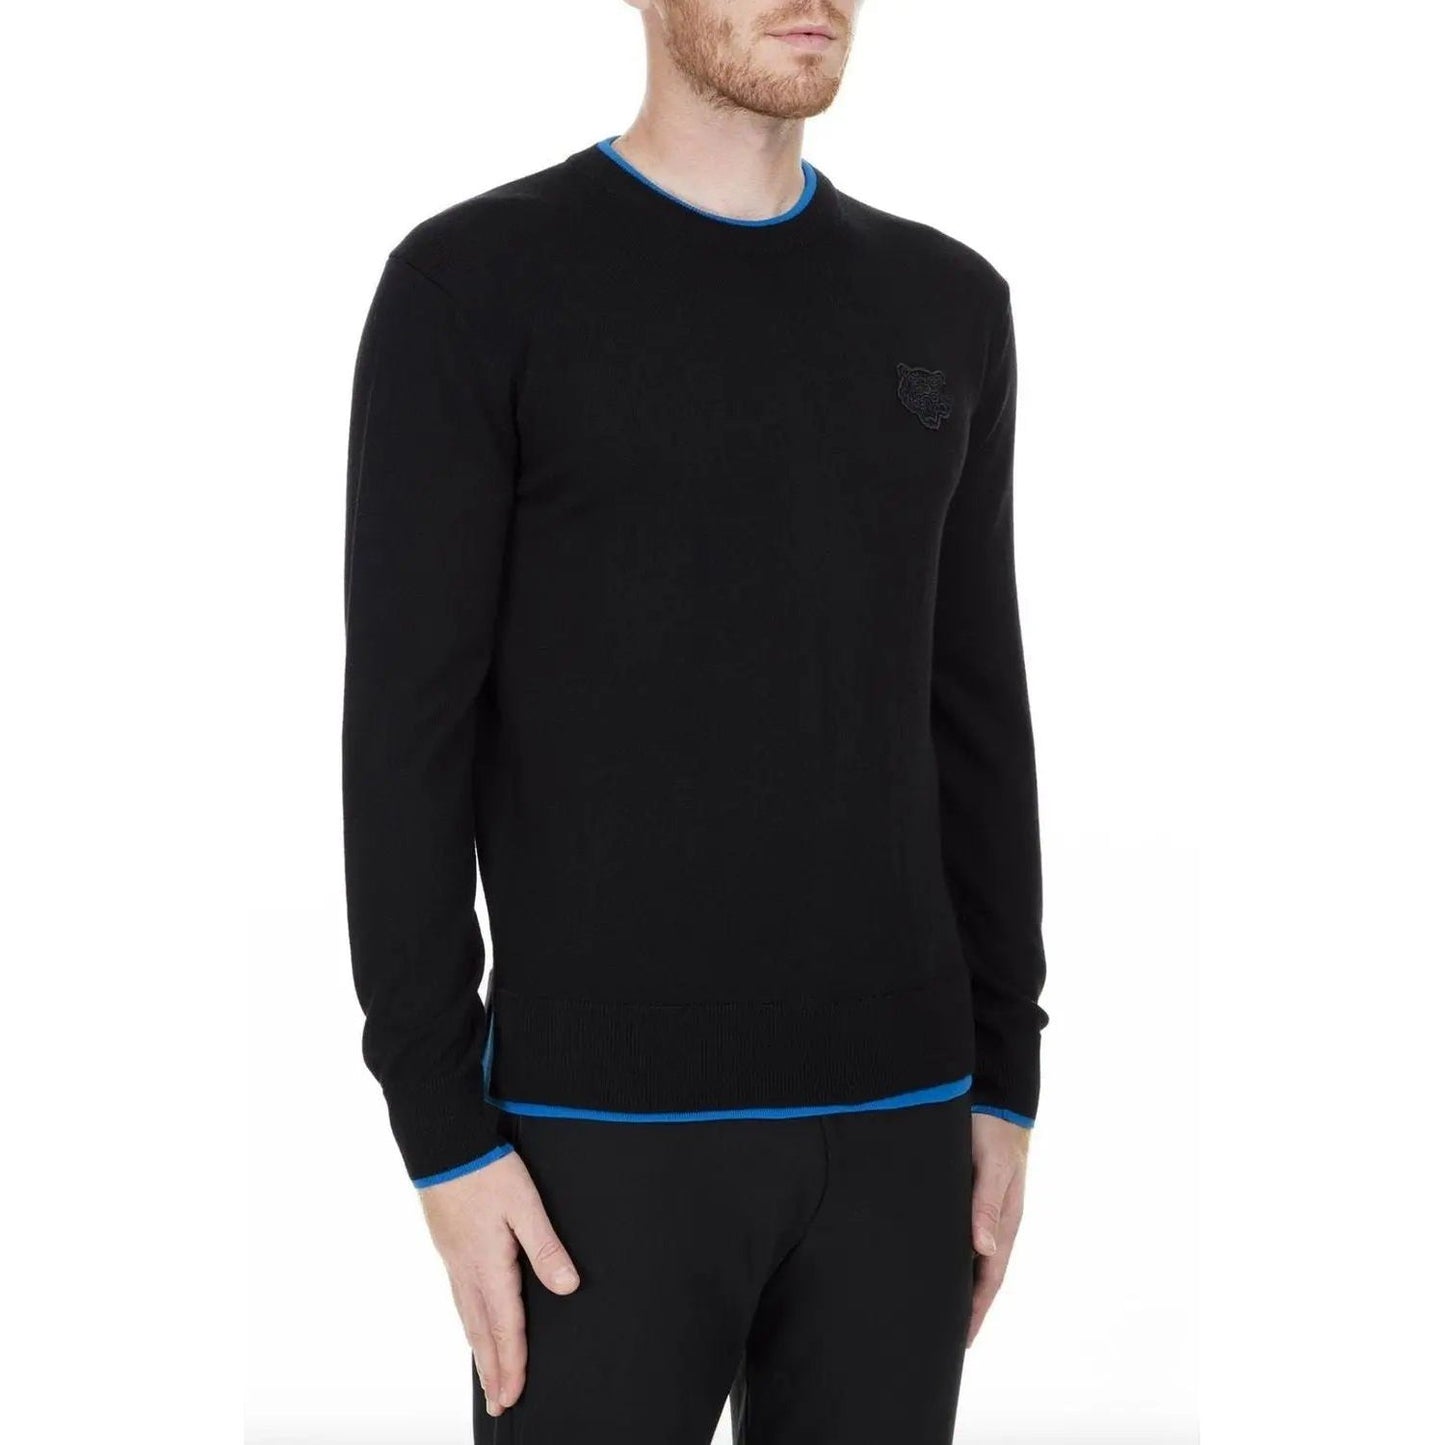 Kenzo Sleek Black Roundneck Sweater with Blue Accents sleek-black-roundneck-sweater-with-blue-accents Kenzo-_-Sleek-Black-Roundneck-Sweater-with-Blue-Accents-_-McRichard-Designer-Brands-113101244.jpg